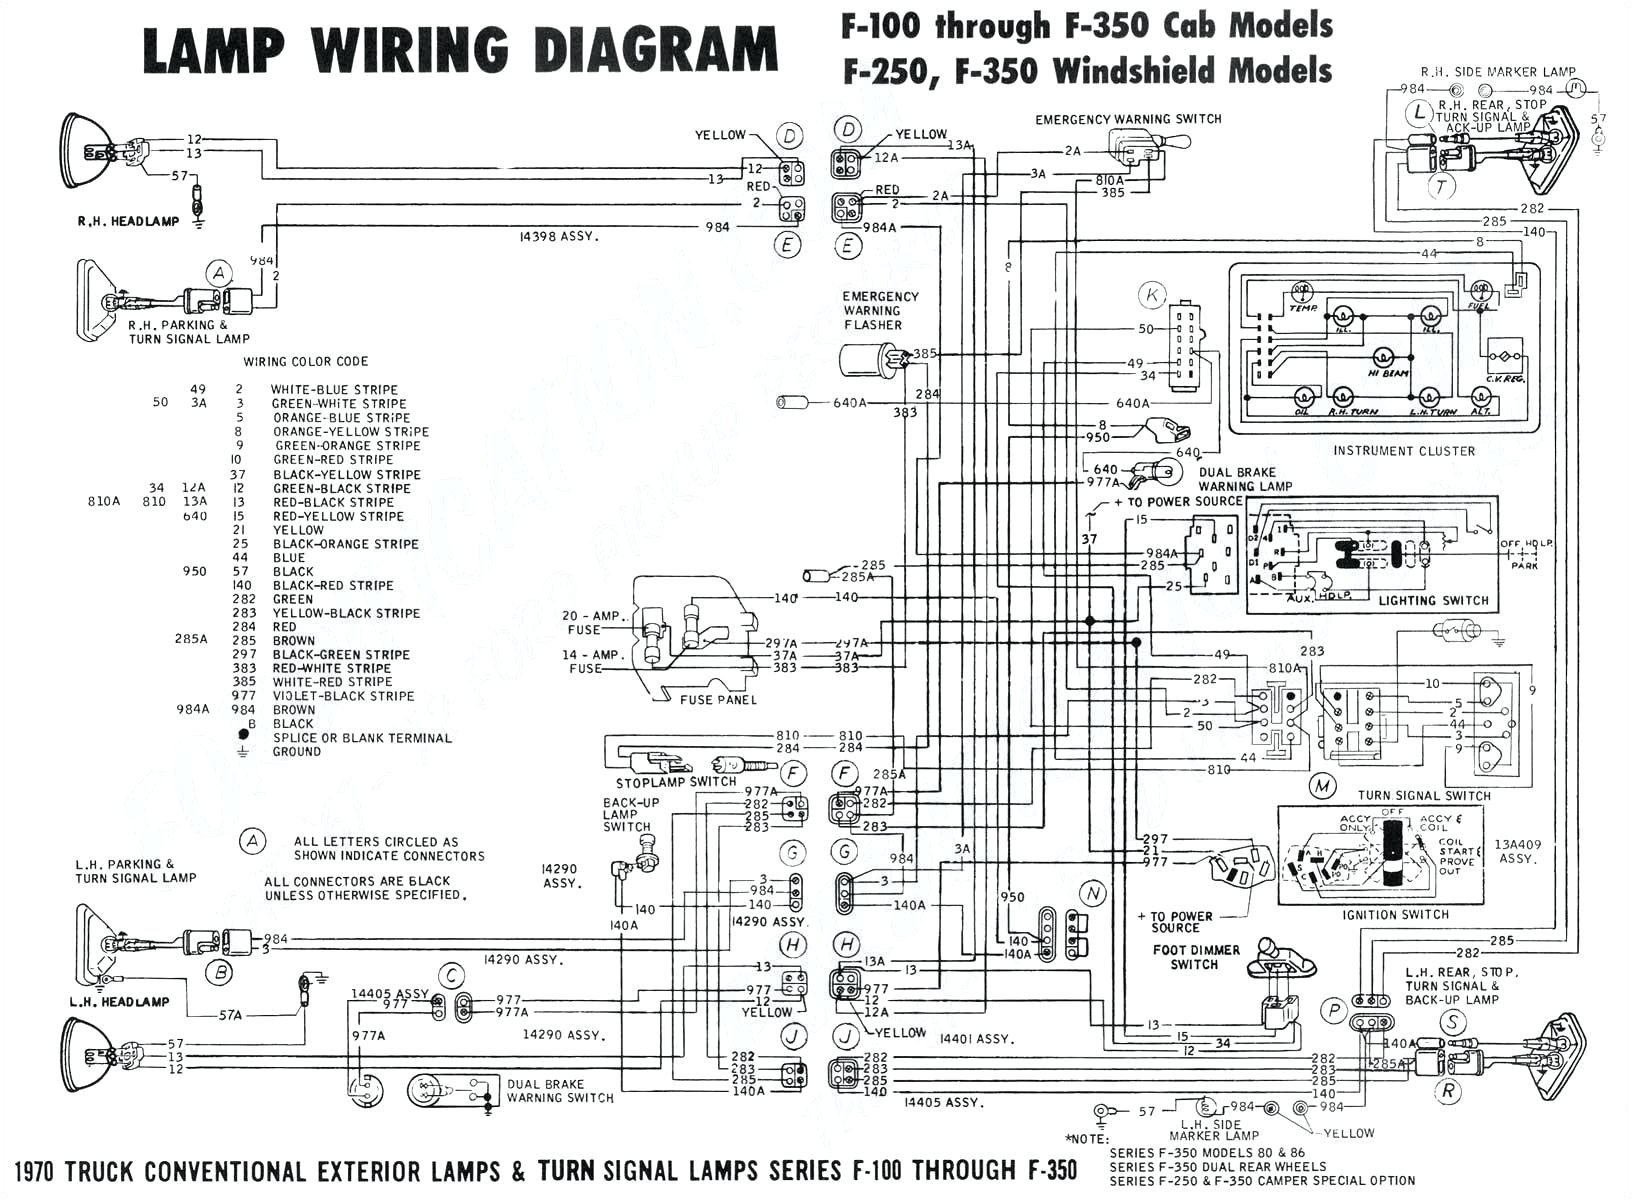 Kenwood Kdc Mp232 Wiring Diagram Staircase Wiring Circuit Diagram Wiring Library